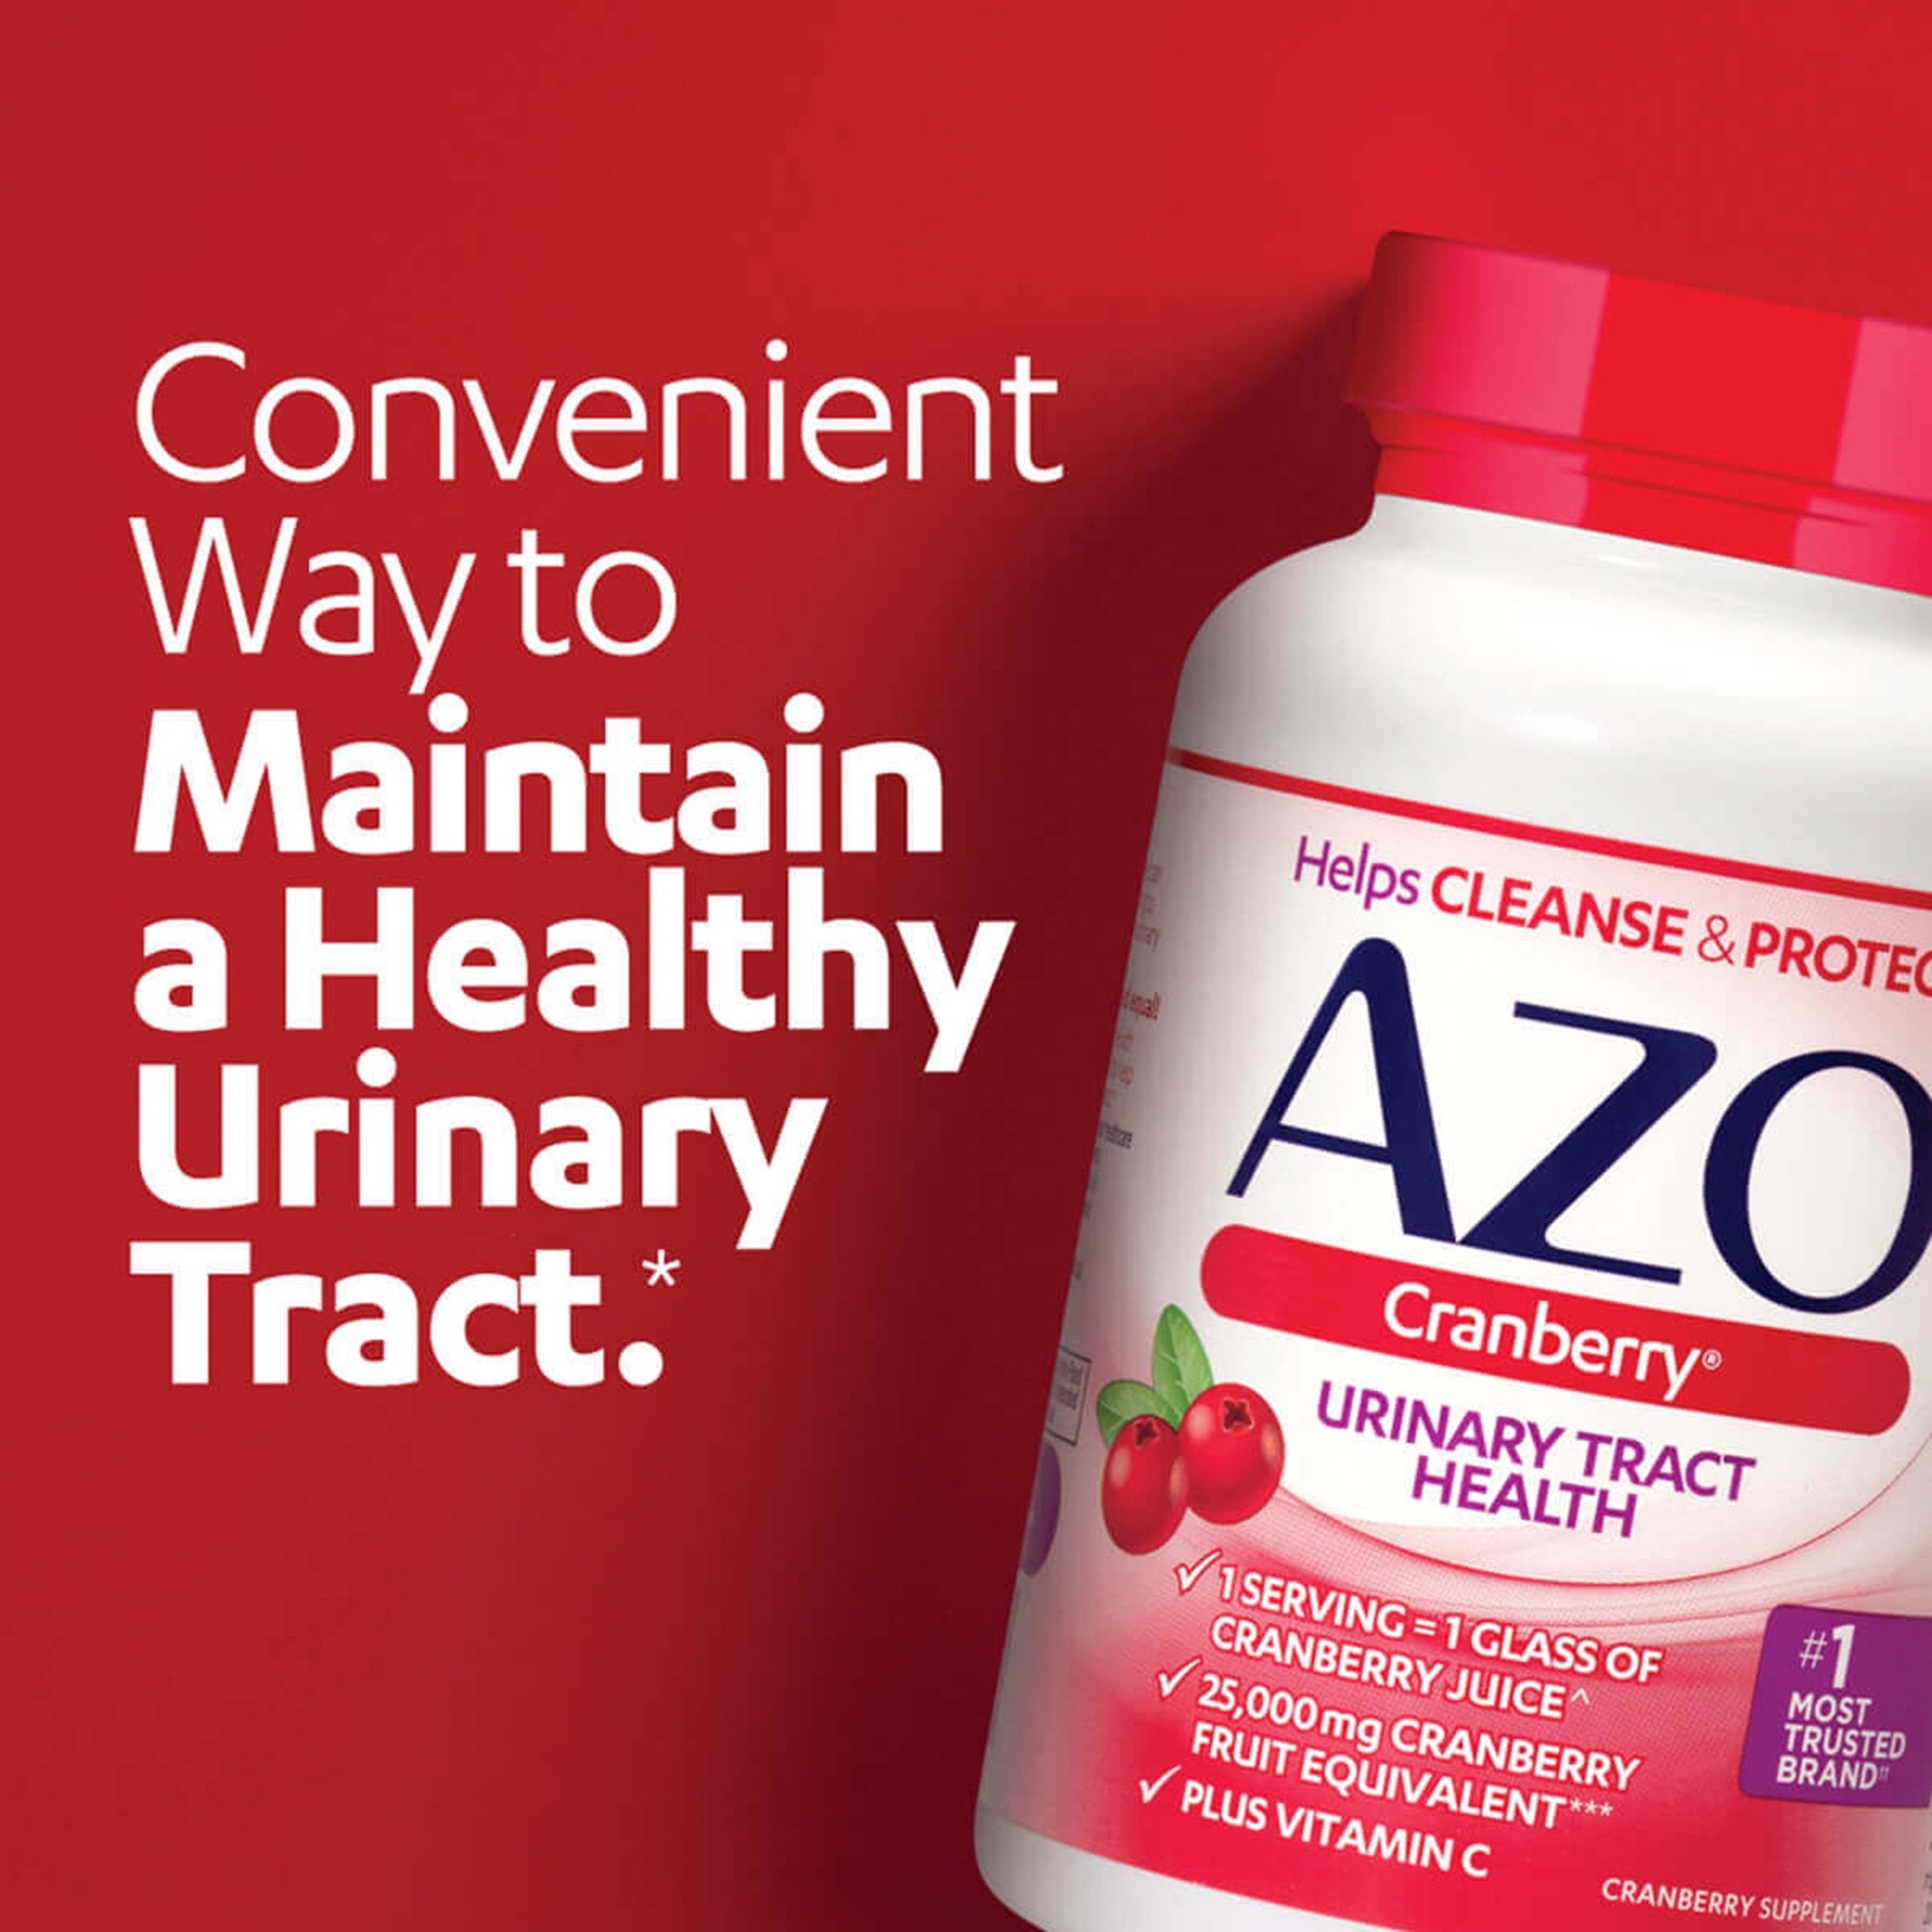 Urinary Tract Health Dietary Supplement AZO Vitamin C (as ascorbic acid) / Cranberry (Vaccinium macrocarpon) Whole Fruit Powder 120 mg - 500 mg Strength Softgel 100 per Bottle